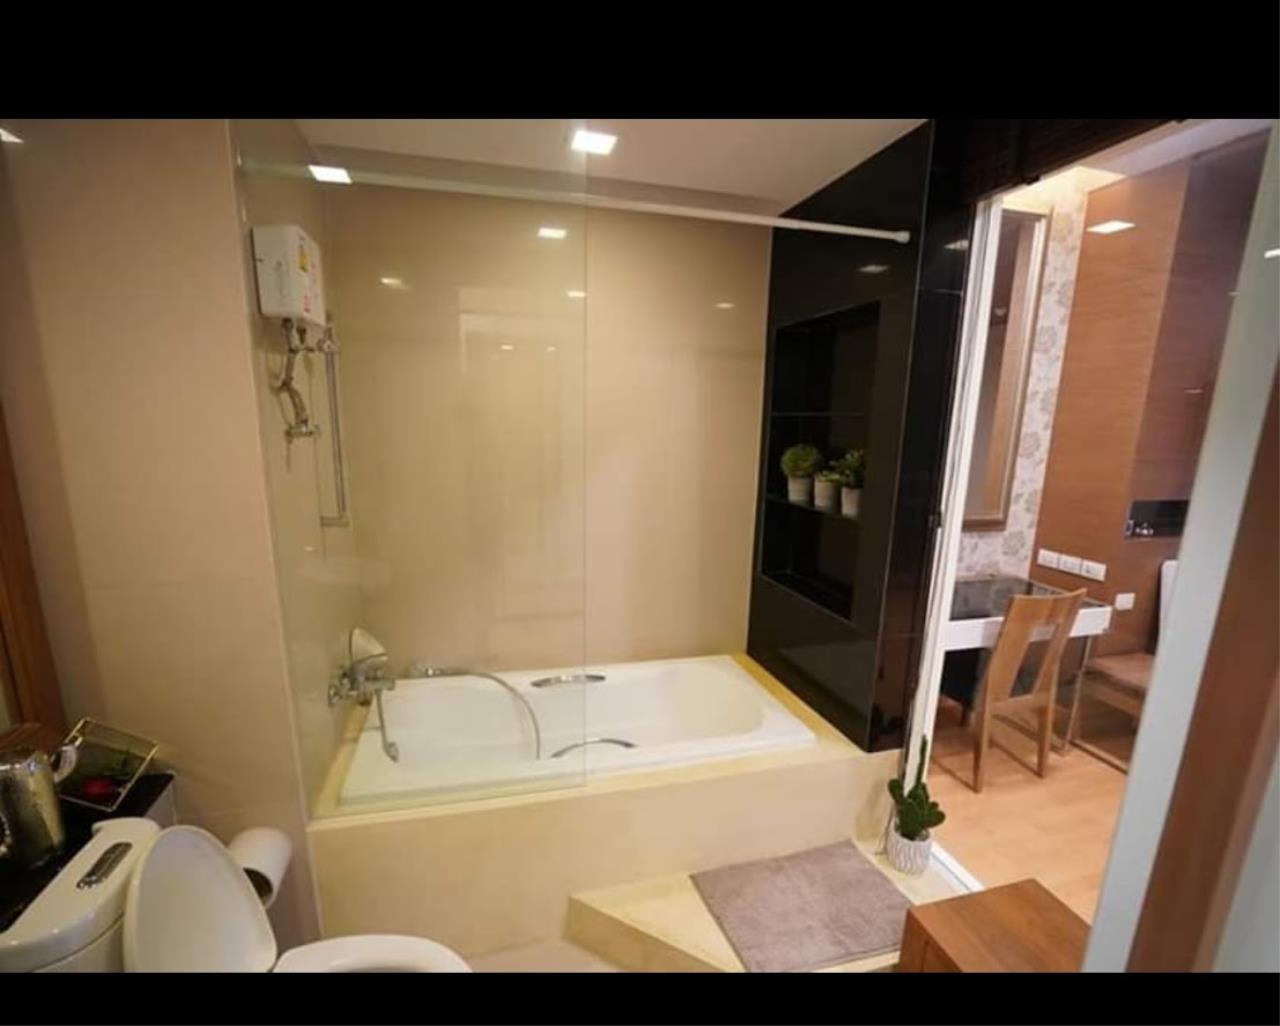 Agent - Arnupharp Sadudee Agency's For rent Condo Nusasiri Grand Condo for rent, 80.3 sq.m.  2 bedrooms, 2 bathrooms, 18th floor, away from Bts Ekamai 0 meters. Fully furnished.ให้เช่าคอนโด ณุศาศิริ แกรนด์ พื้นที่ 80.3 ตร.ม.  2 ห้องนอน 2 ห้องน้ำ ชั้น 18  ห่างจาก Bts เอกมัย 0 เมตร  7